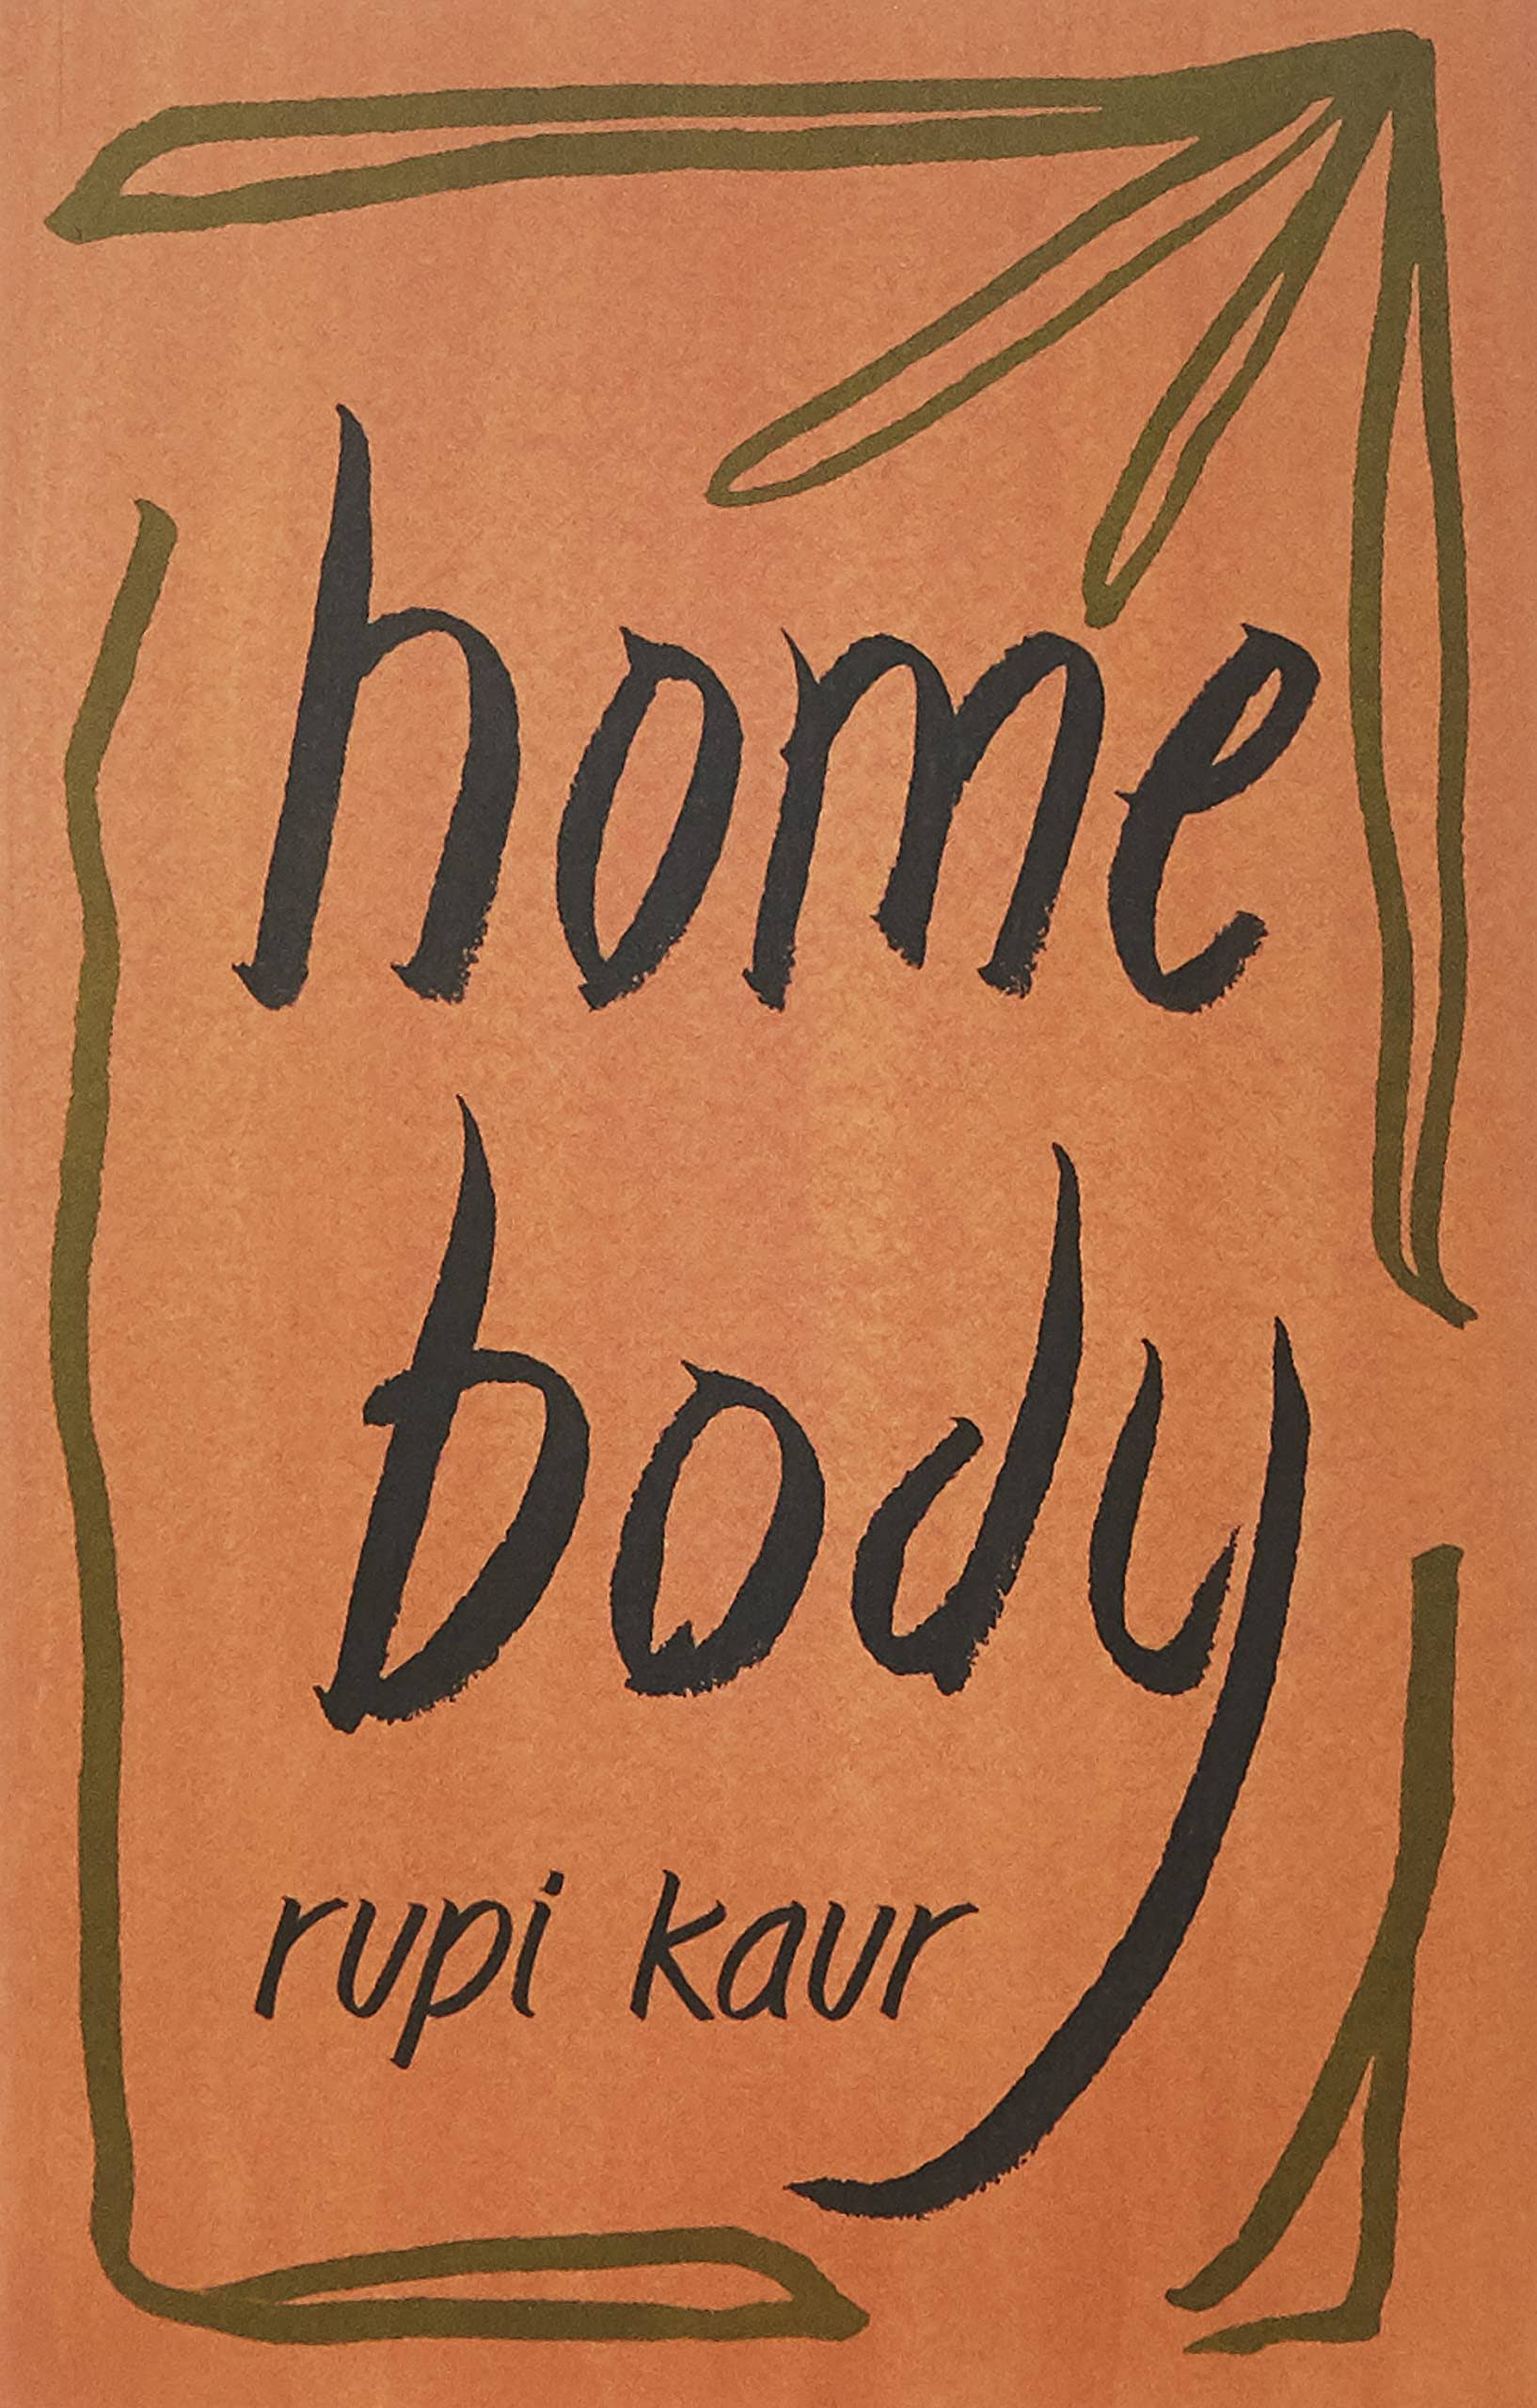 Home Body by Rupi Kaur